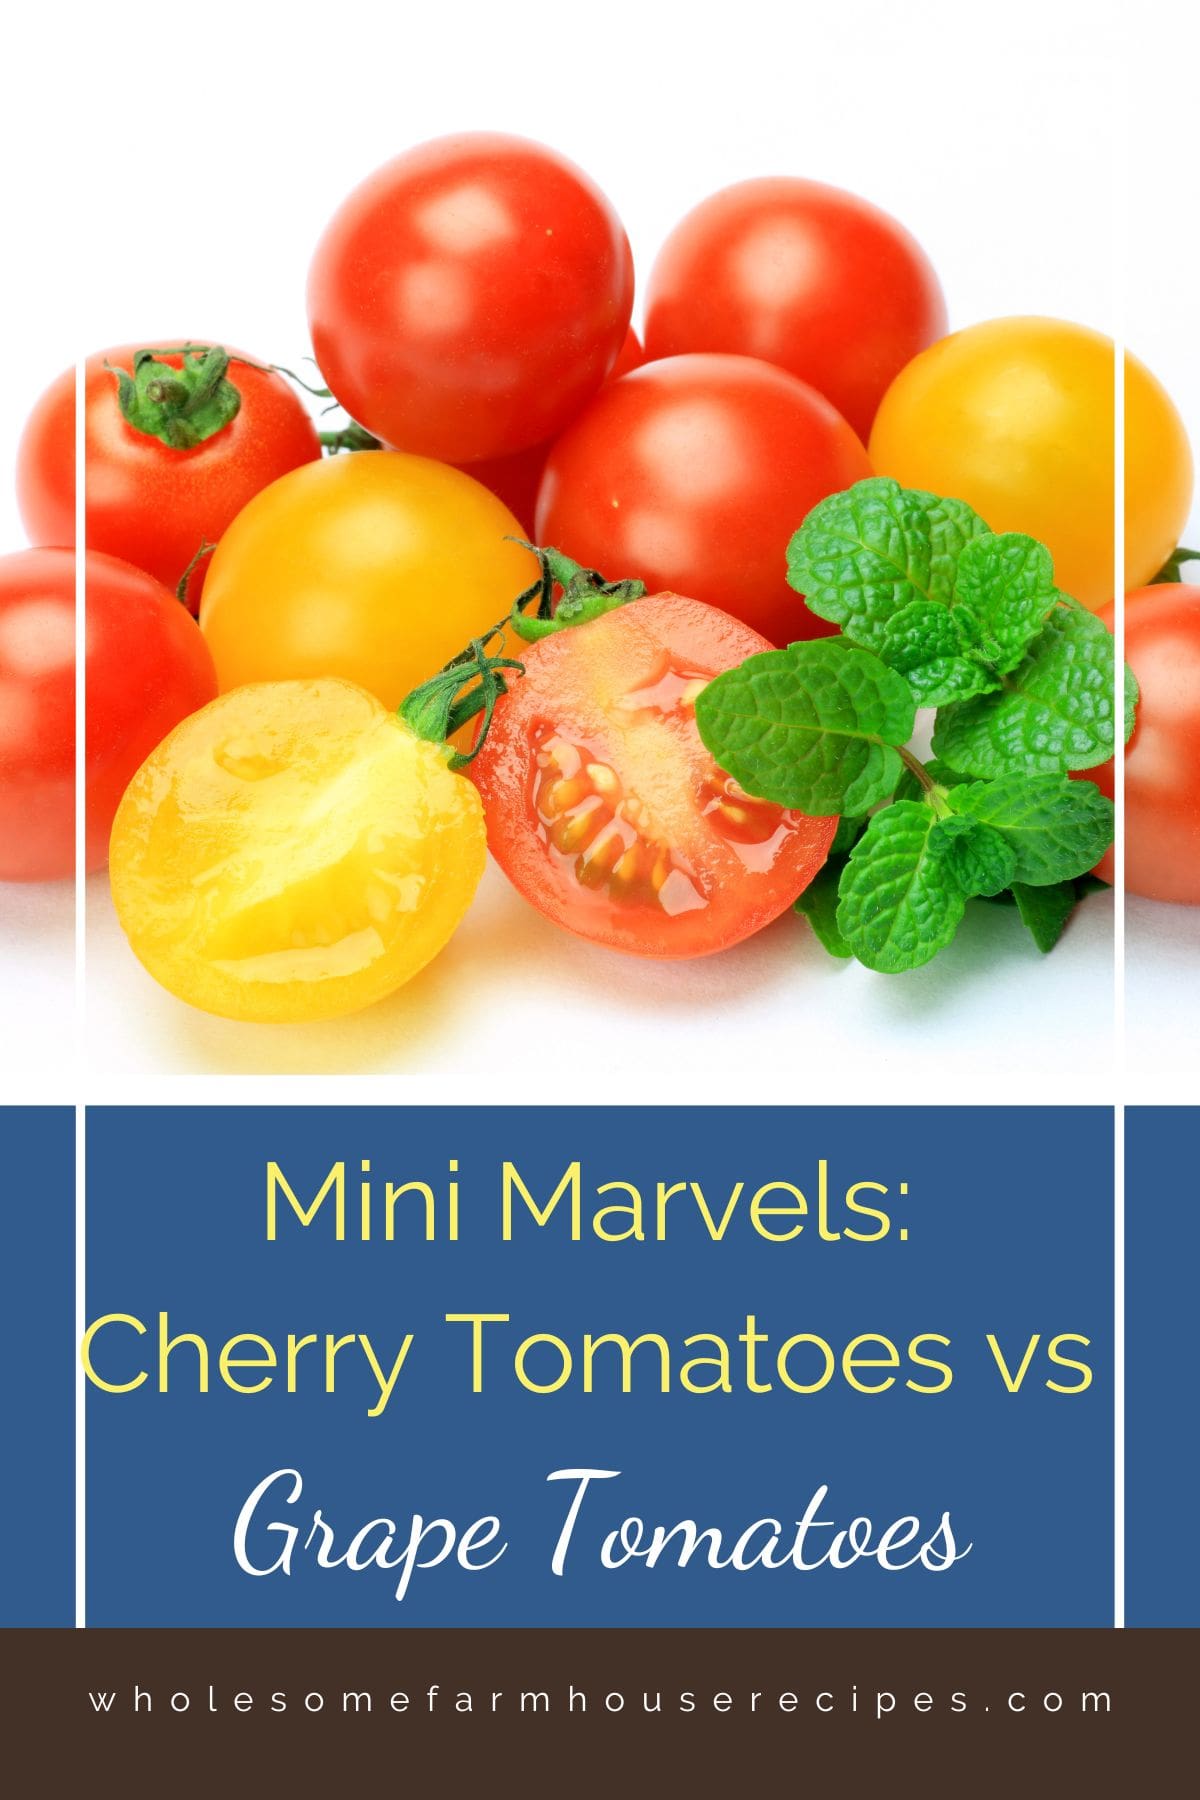 Mini Marvels Cherry Tomatoes vs Grape Tomatoes